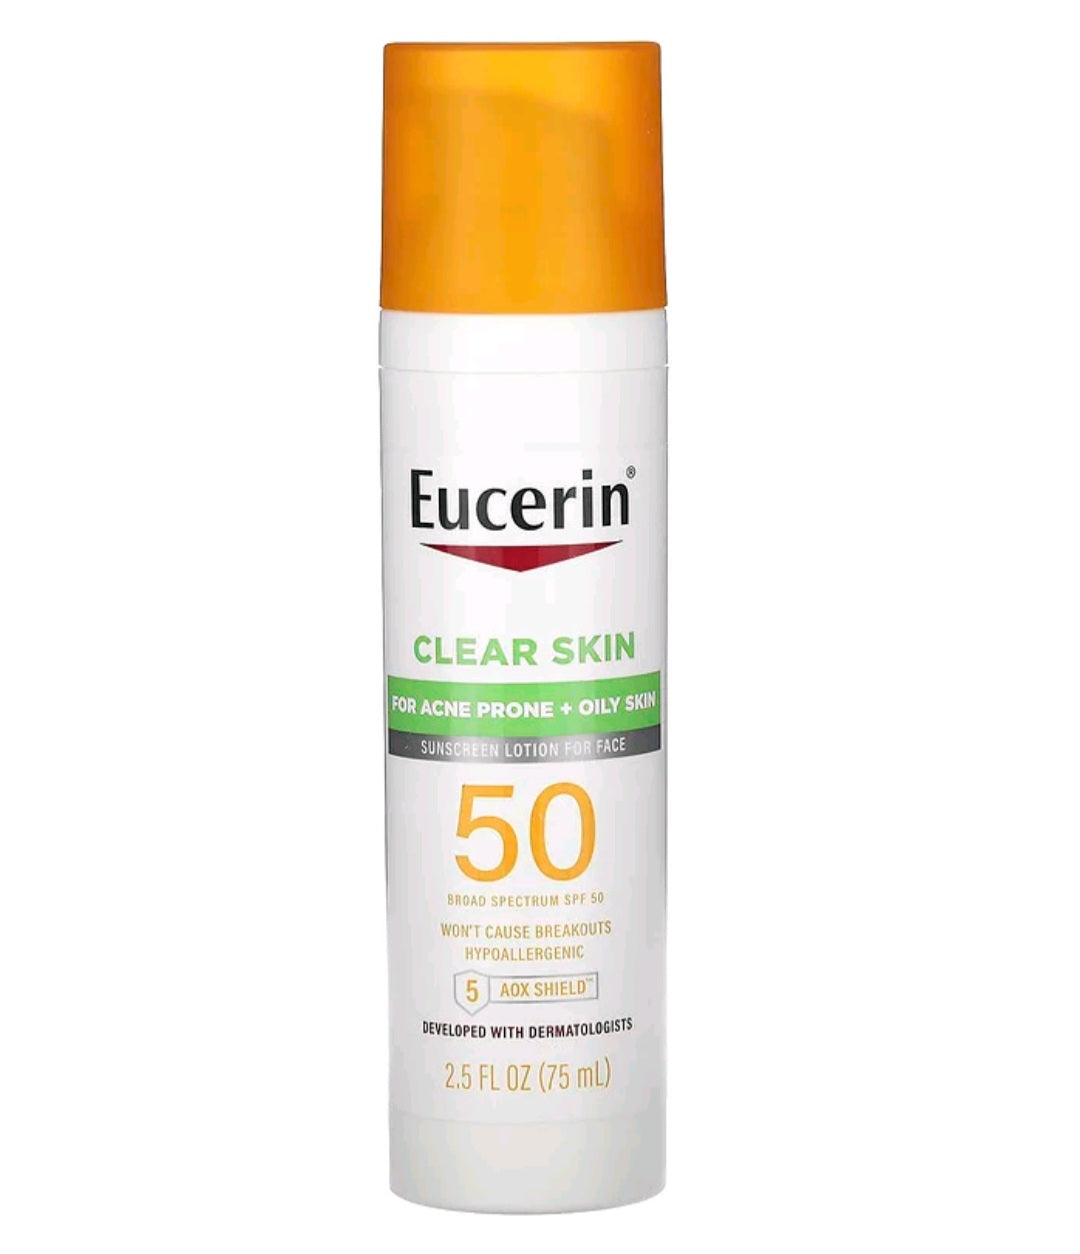 Eucerin Clear Skin, Lightweight Sunscreen Lotion for Face, SPF 50, Fragrance Free, 2.5 fl oz (75 ml)